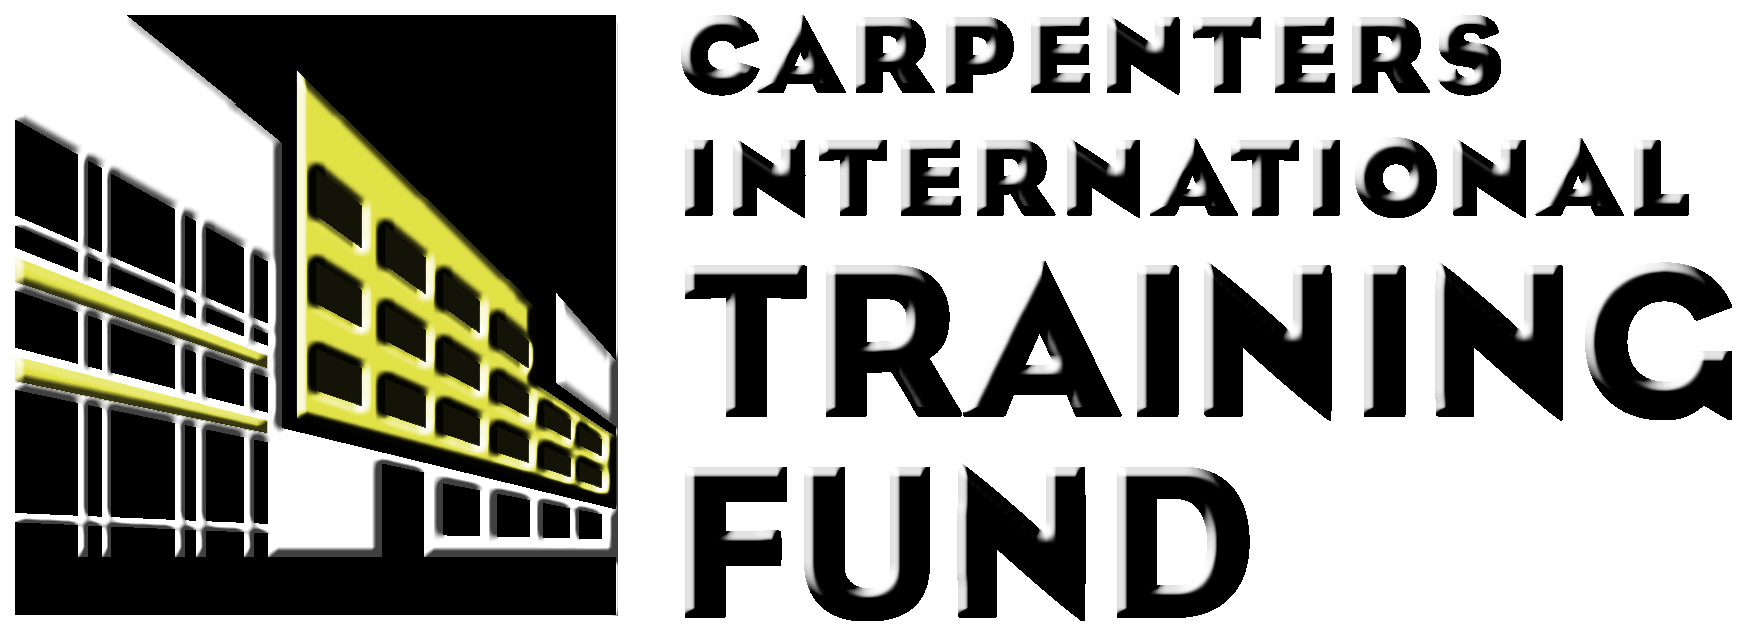 Carpenters International Training Fund logo